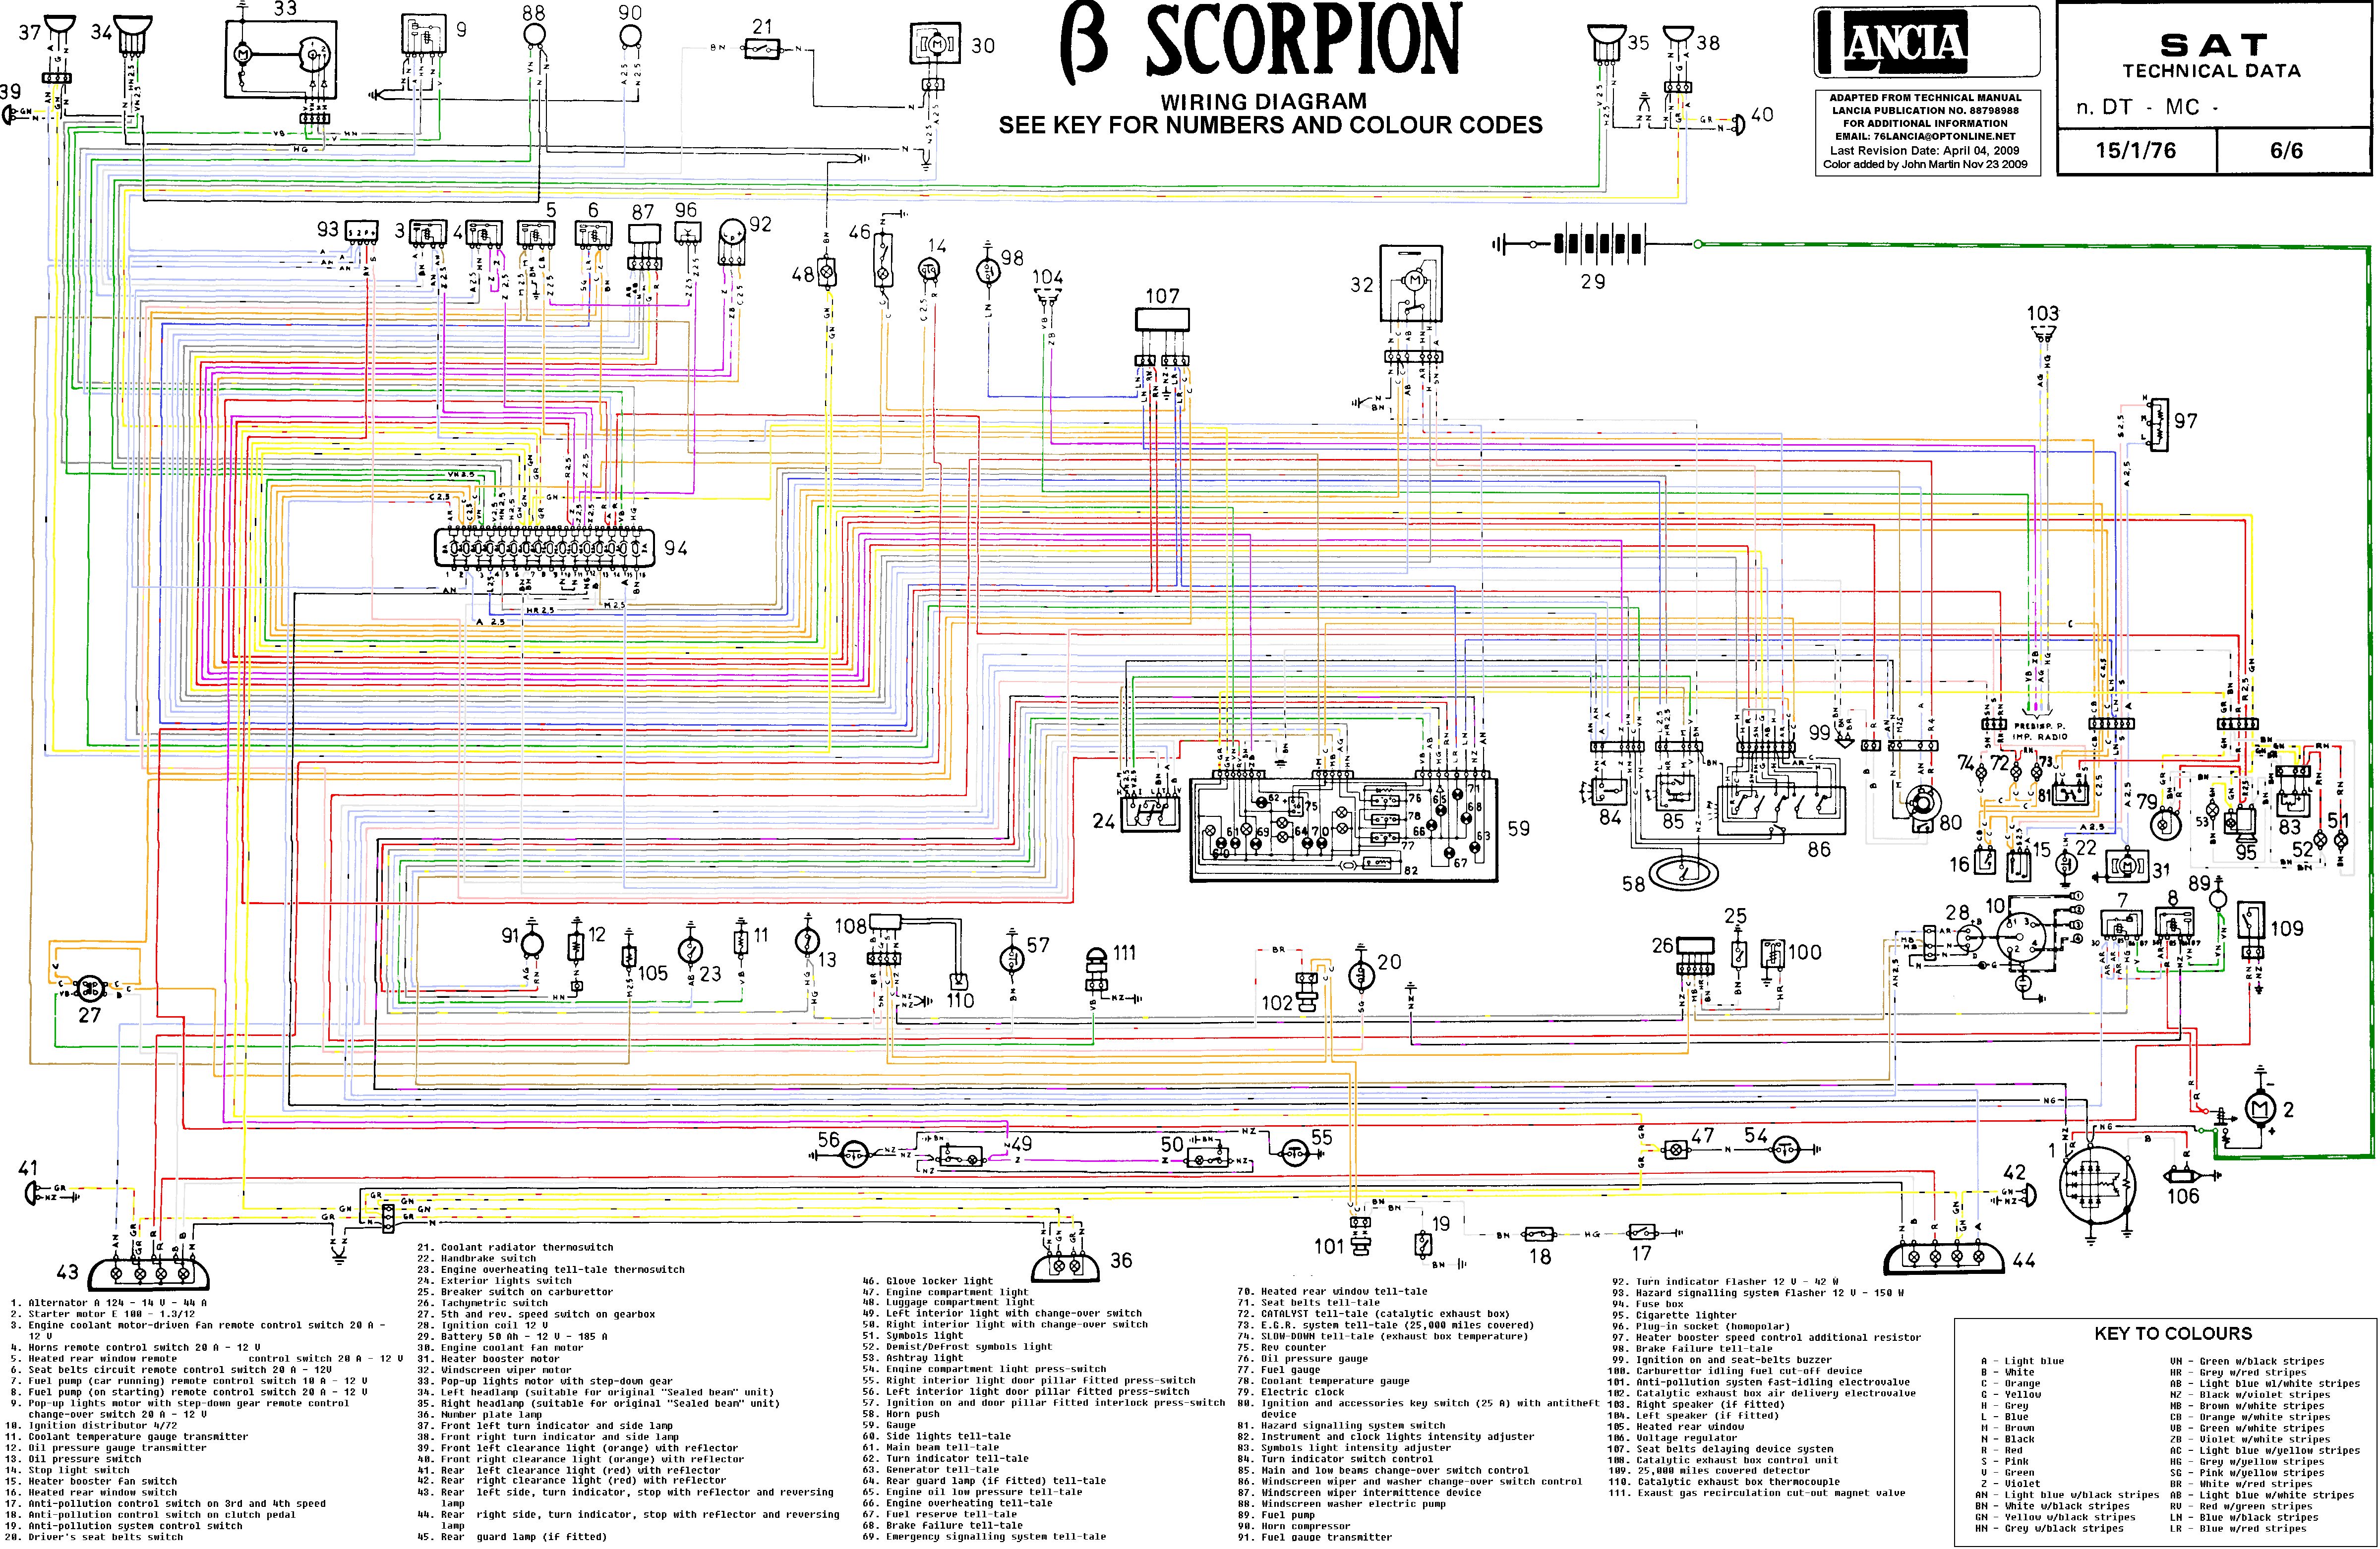 Scorpion wiring-1.jpg